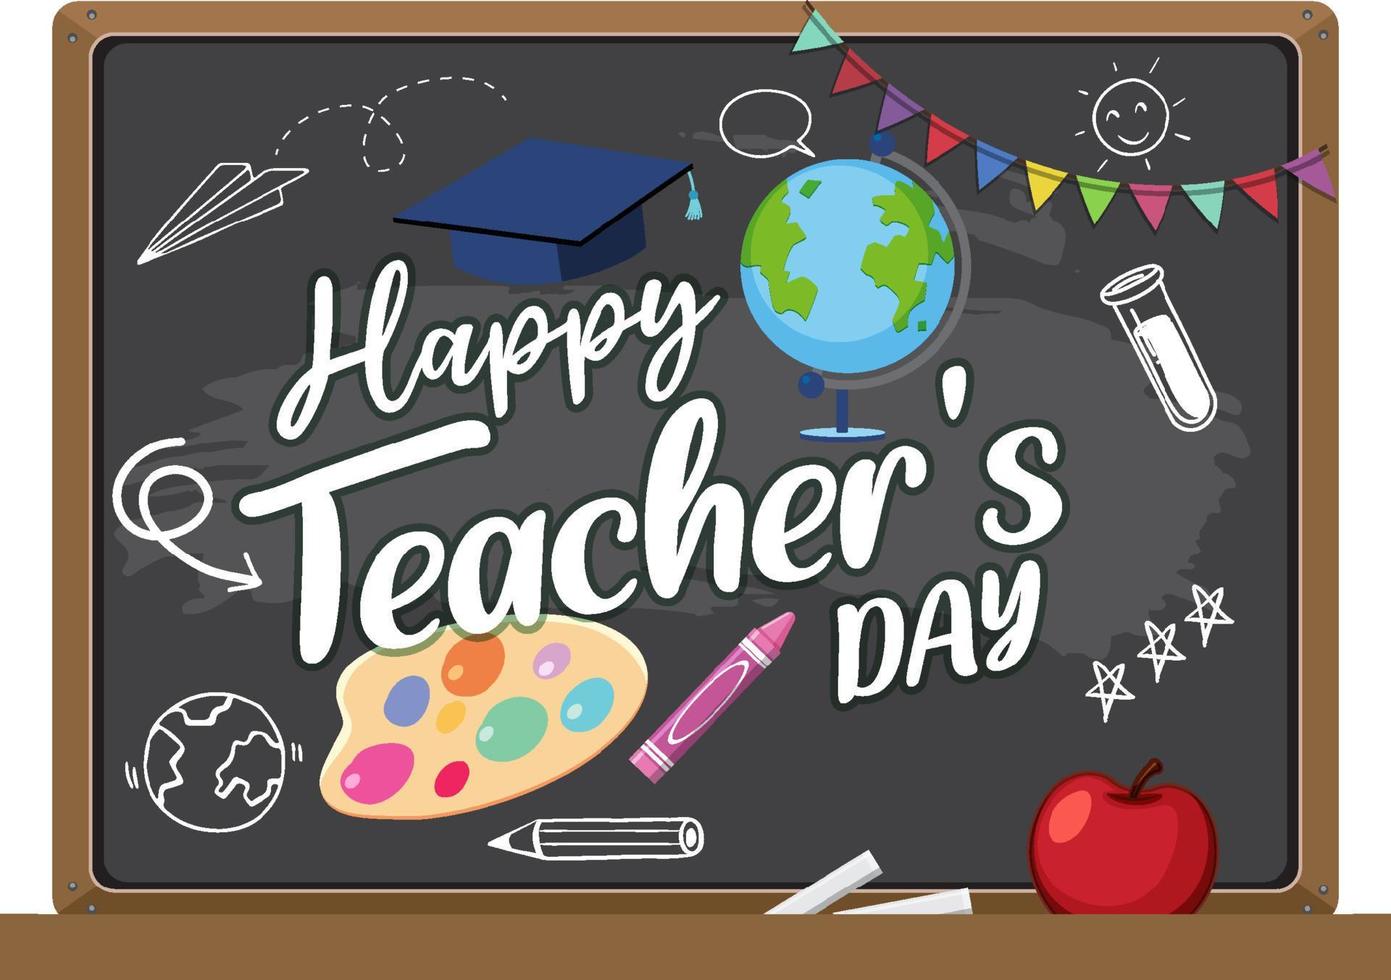 Happy Teacher's Day with a female teacher pointing on chalkboard vector